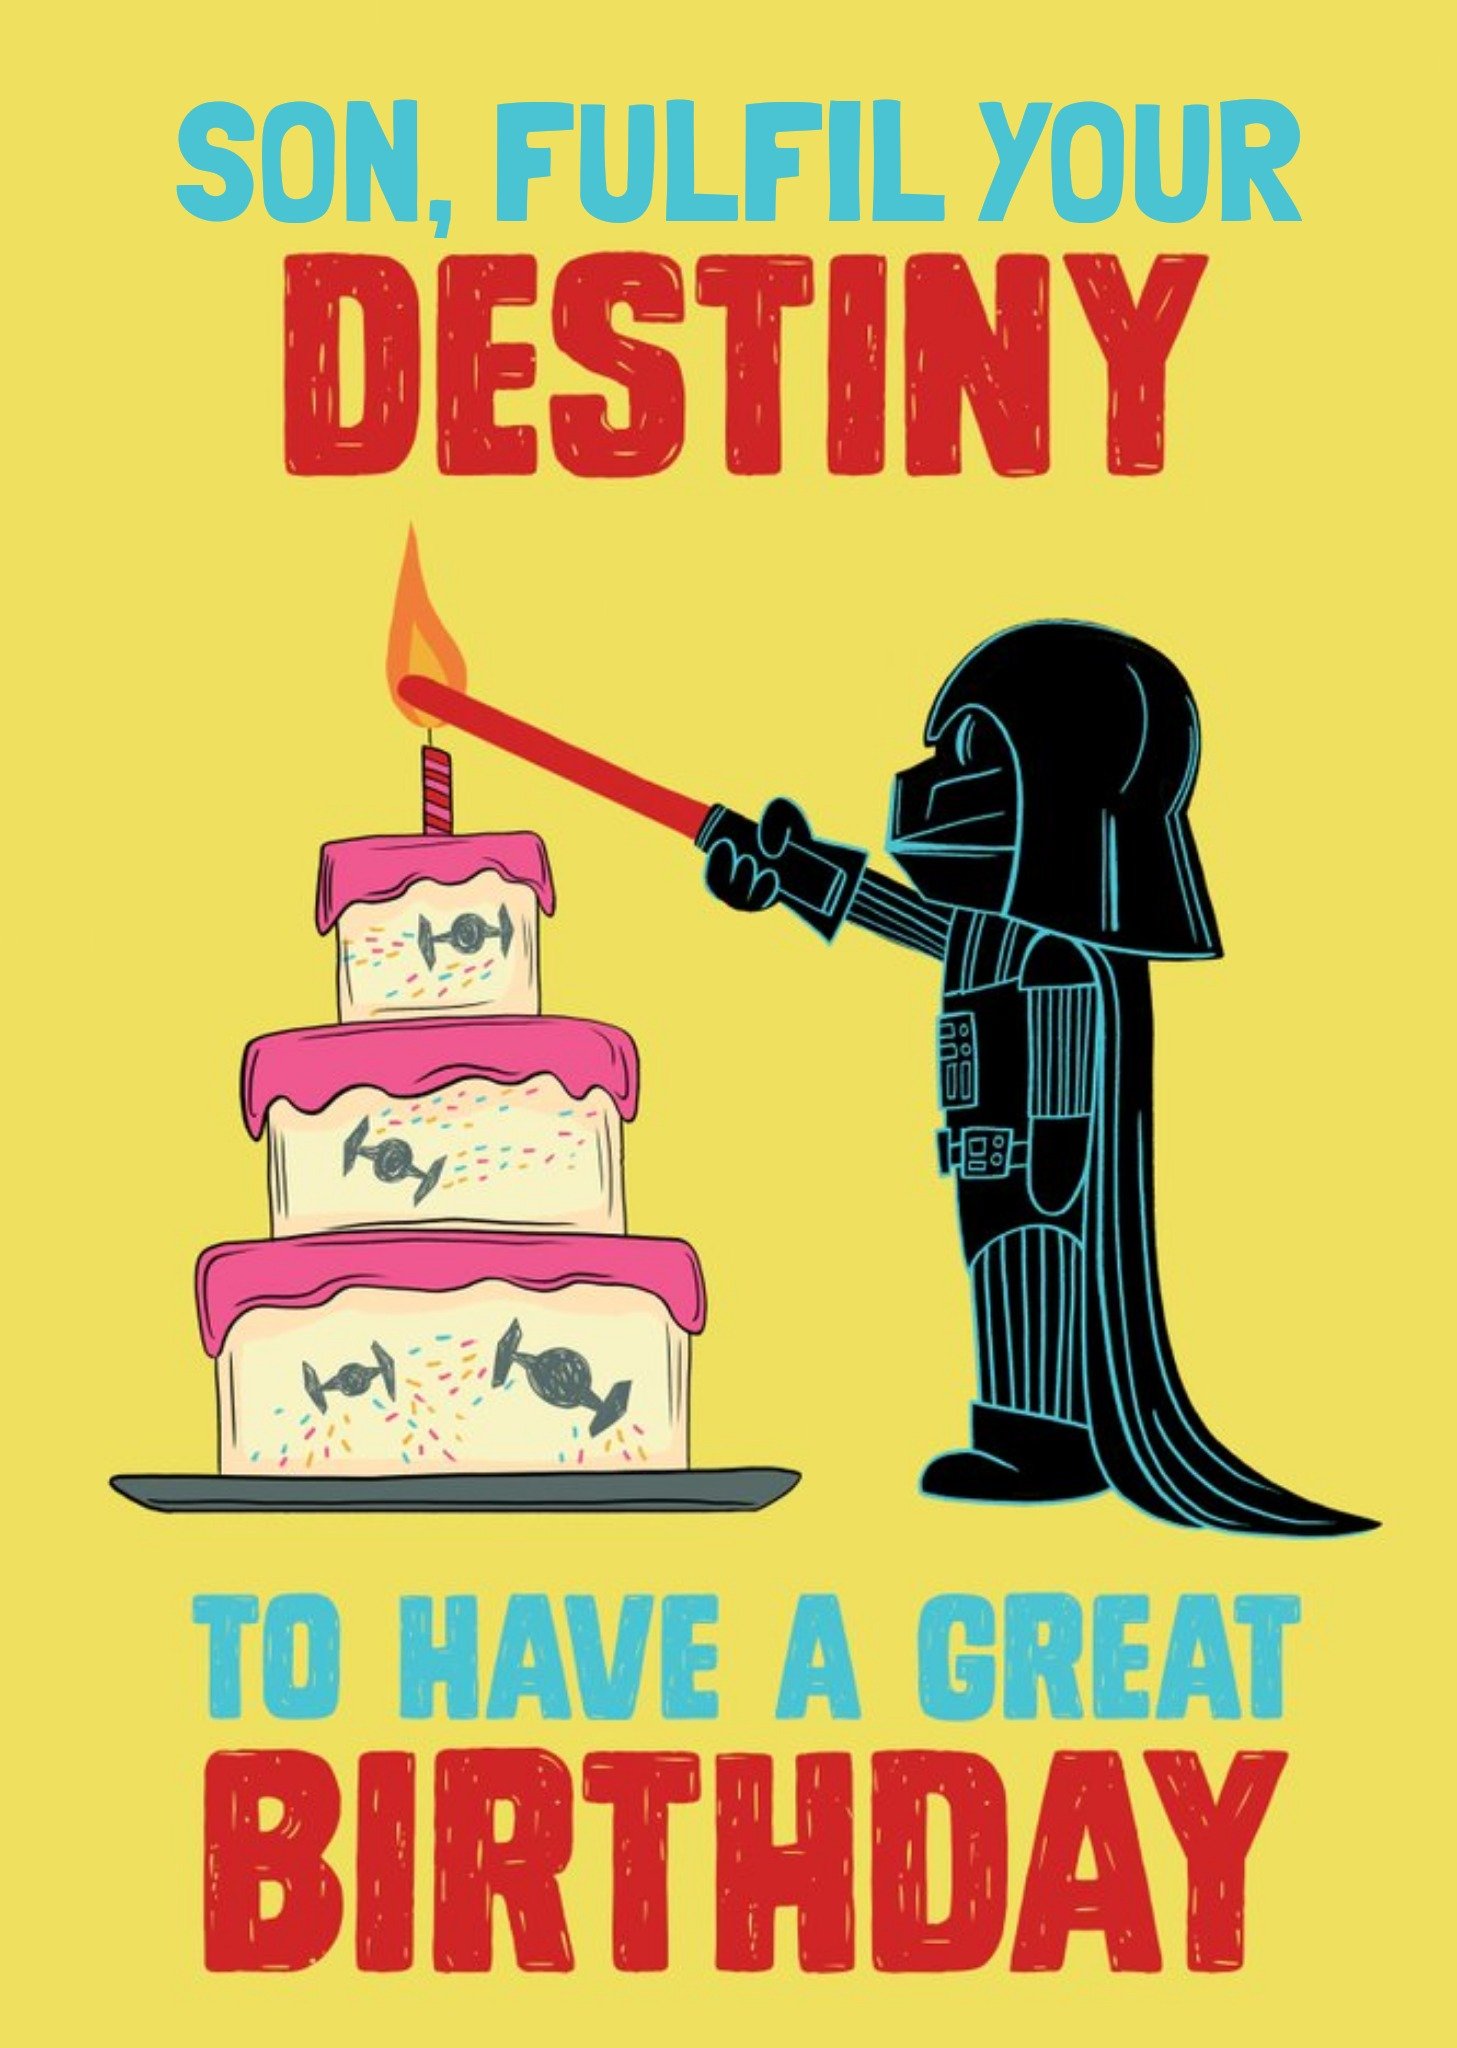 Disney Star Wars Darth Vader Birthday Card For Your Son Ecard